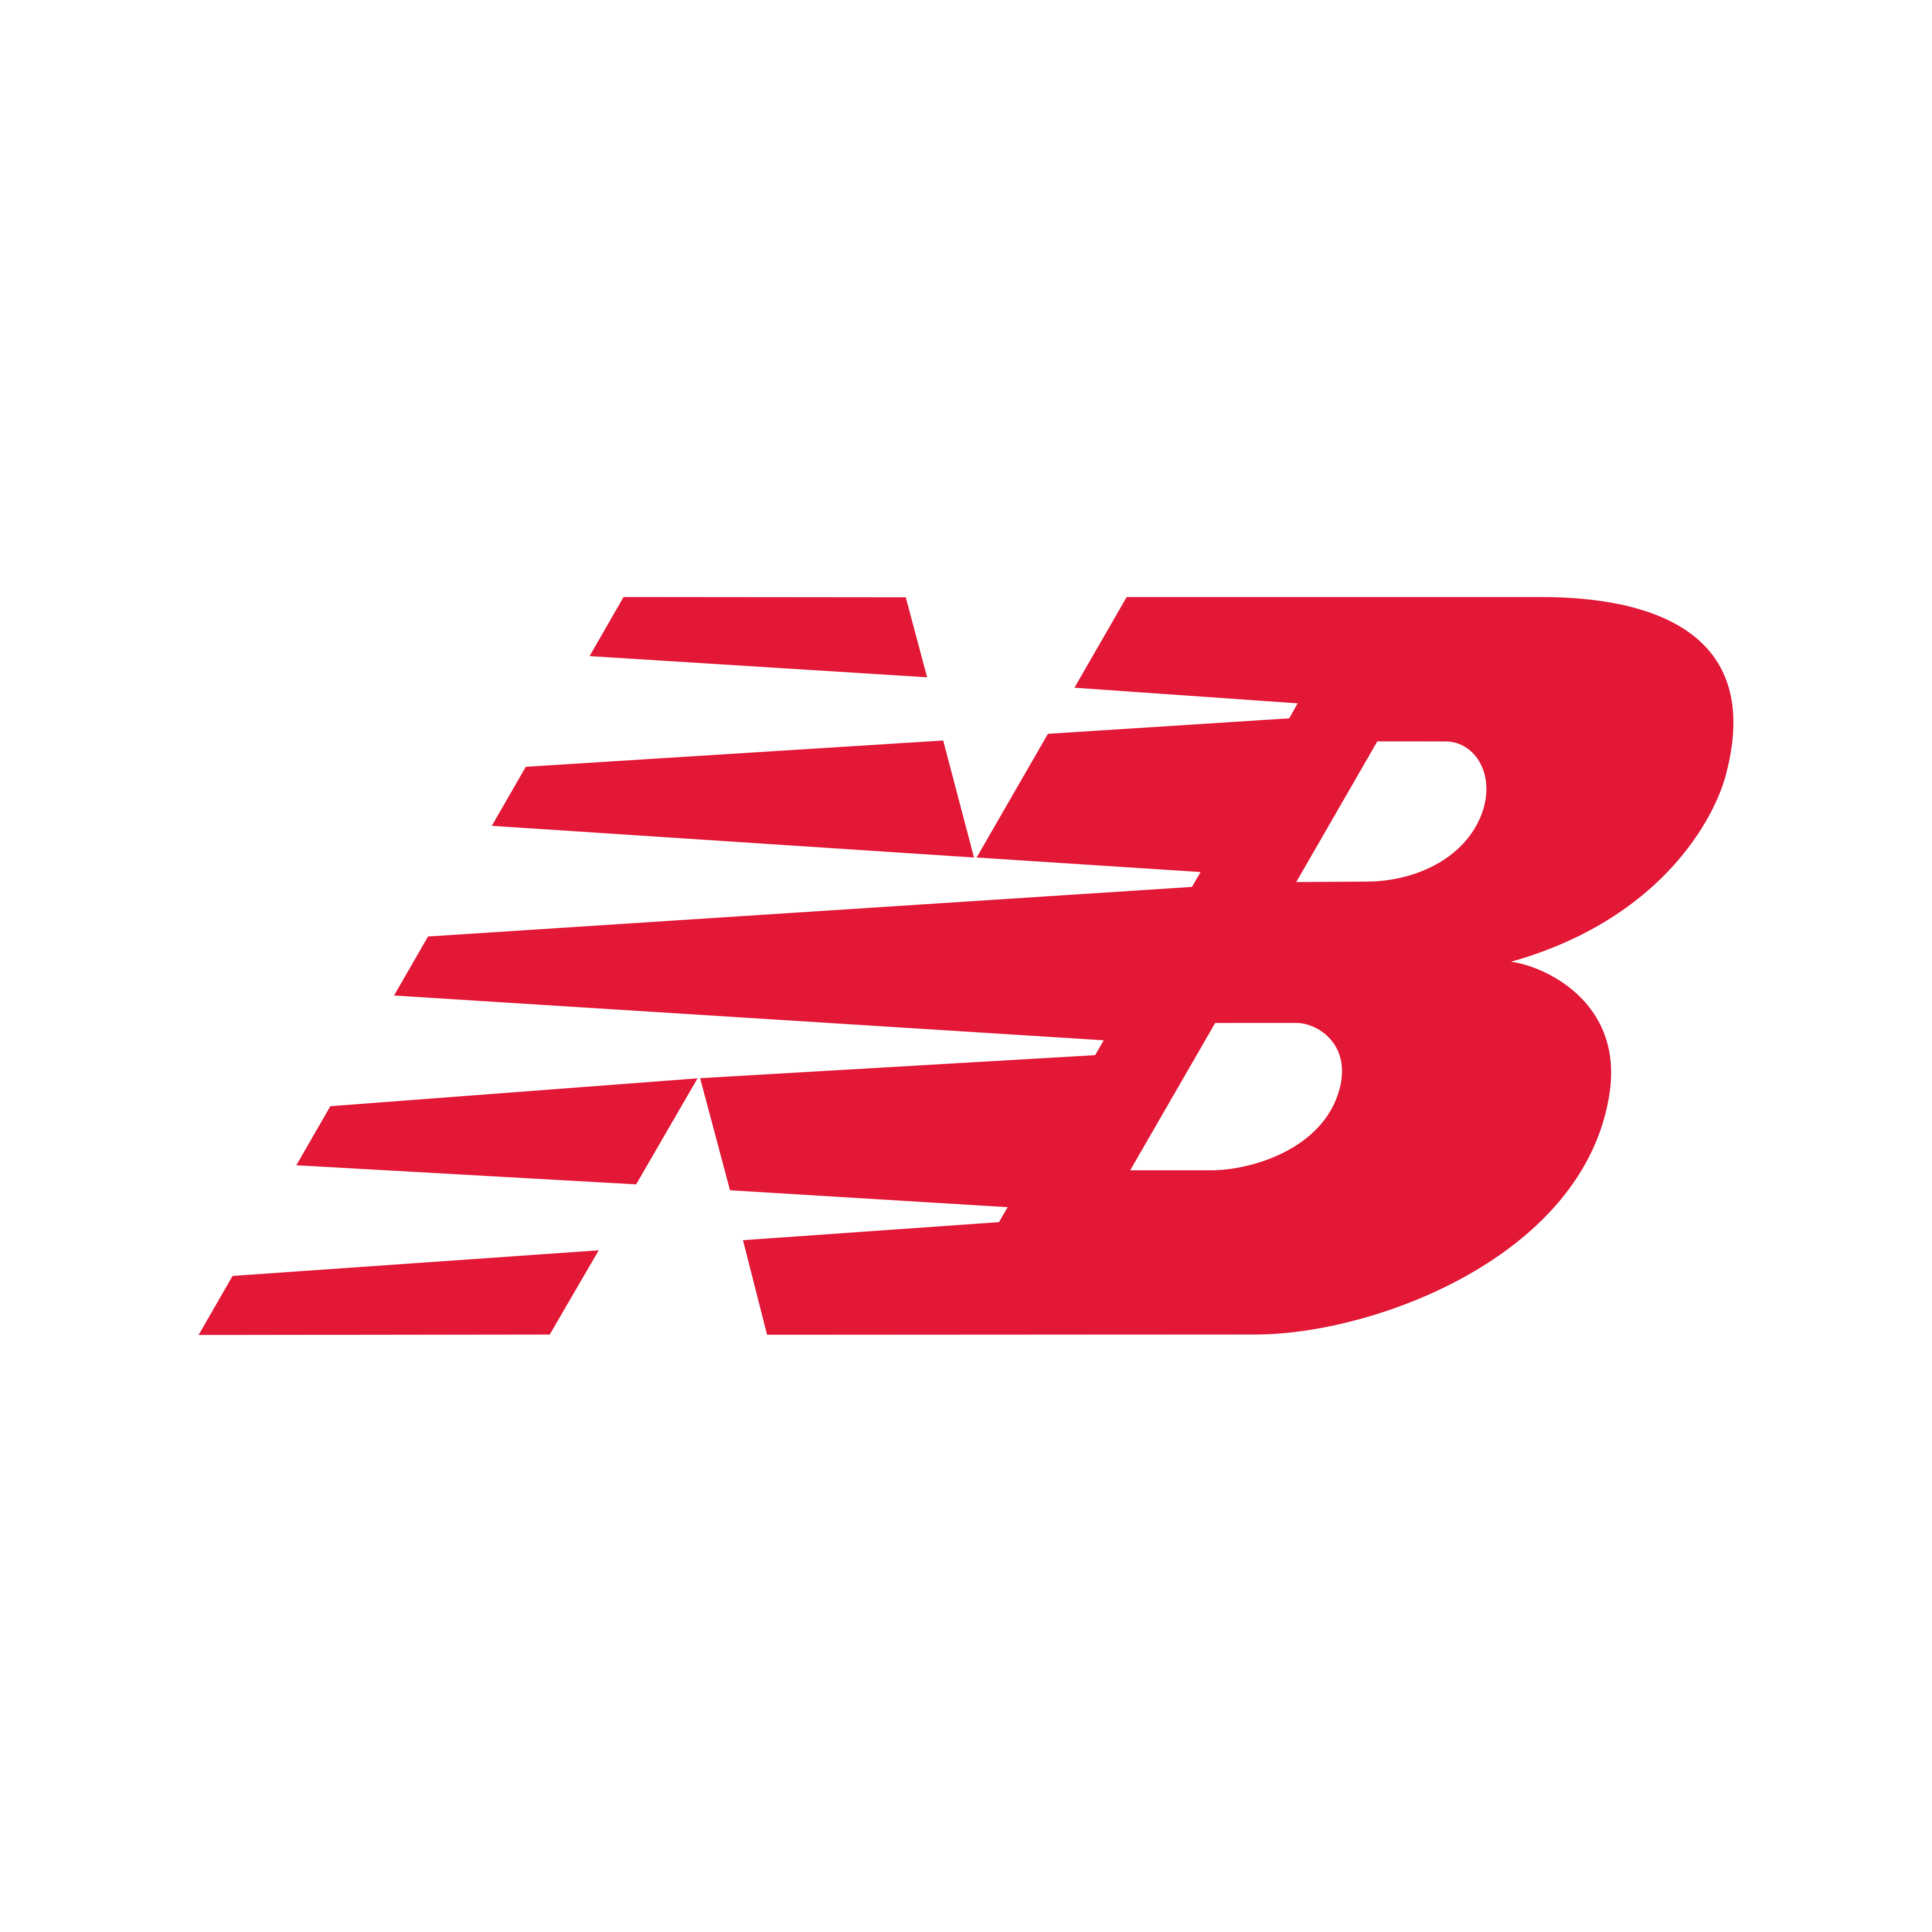 New Balance – Logos Downloa